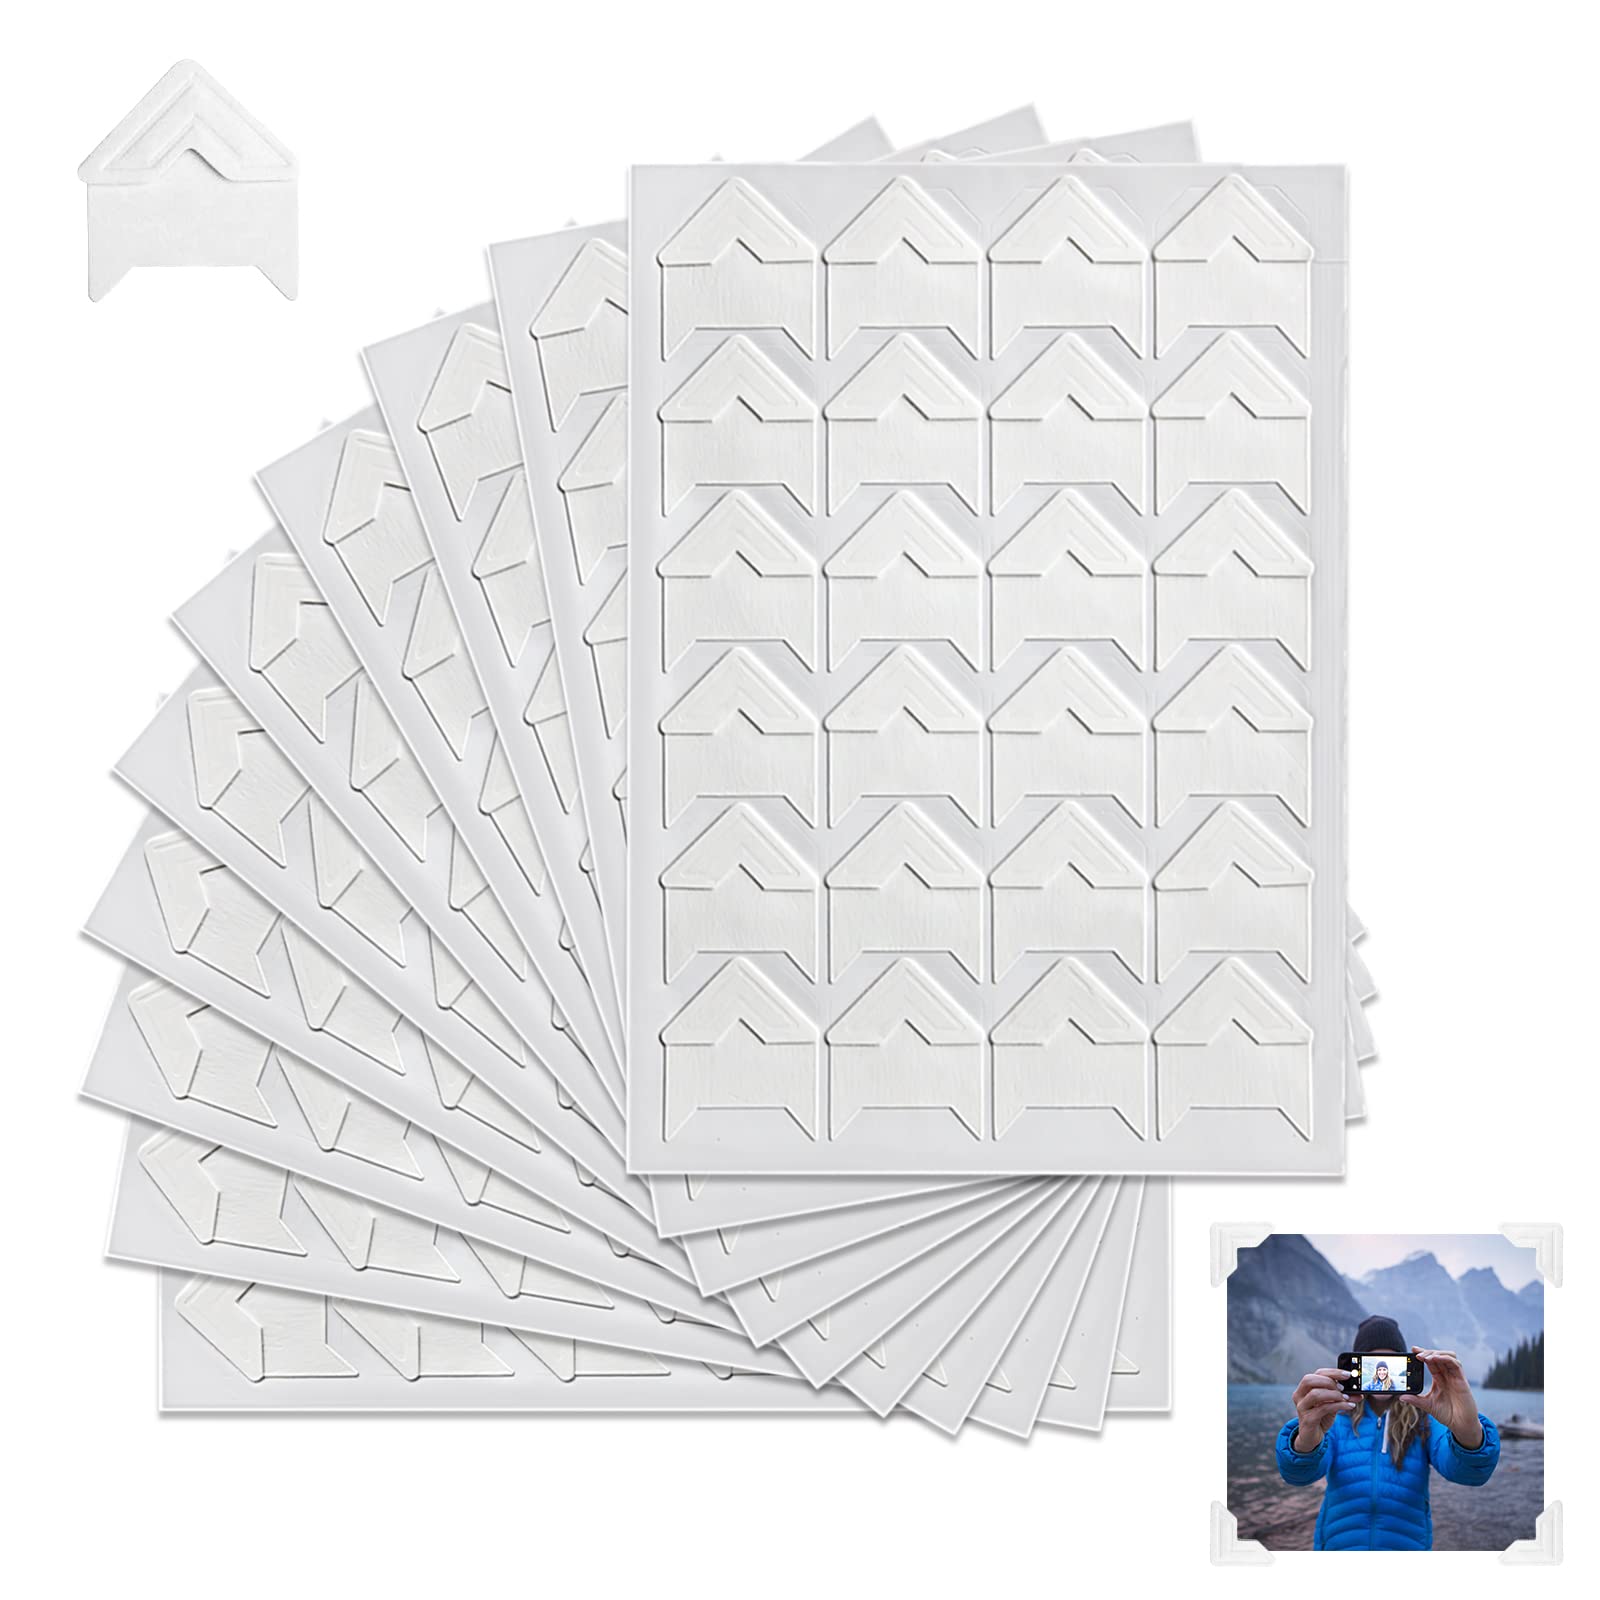 4x sheets of 102pcs Self-adhesive Photo Corner Stickers scrapbook